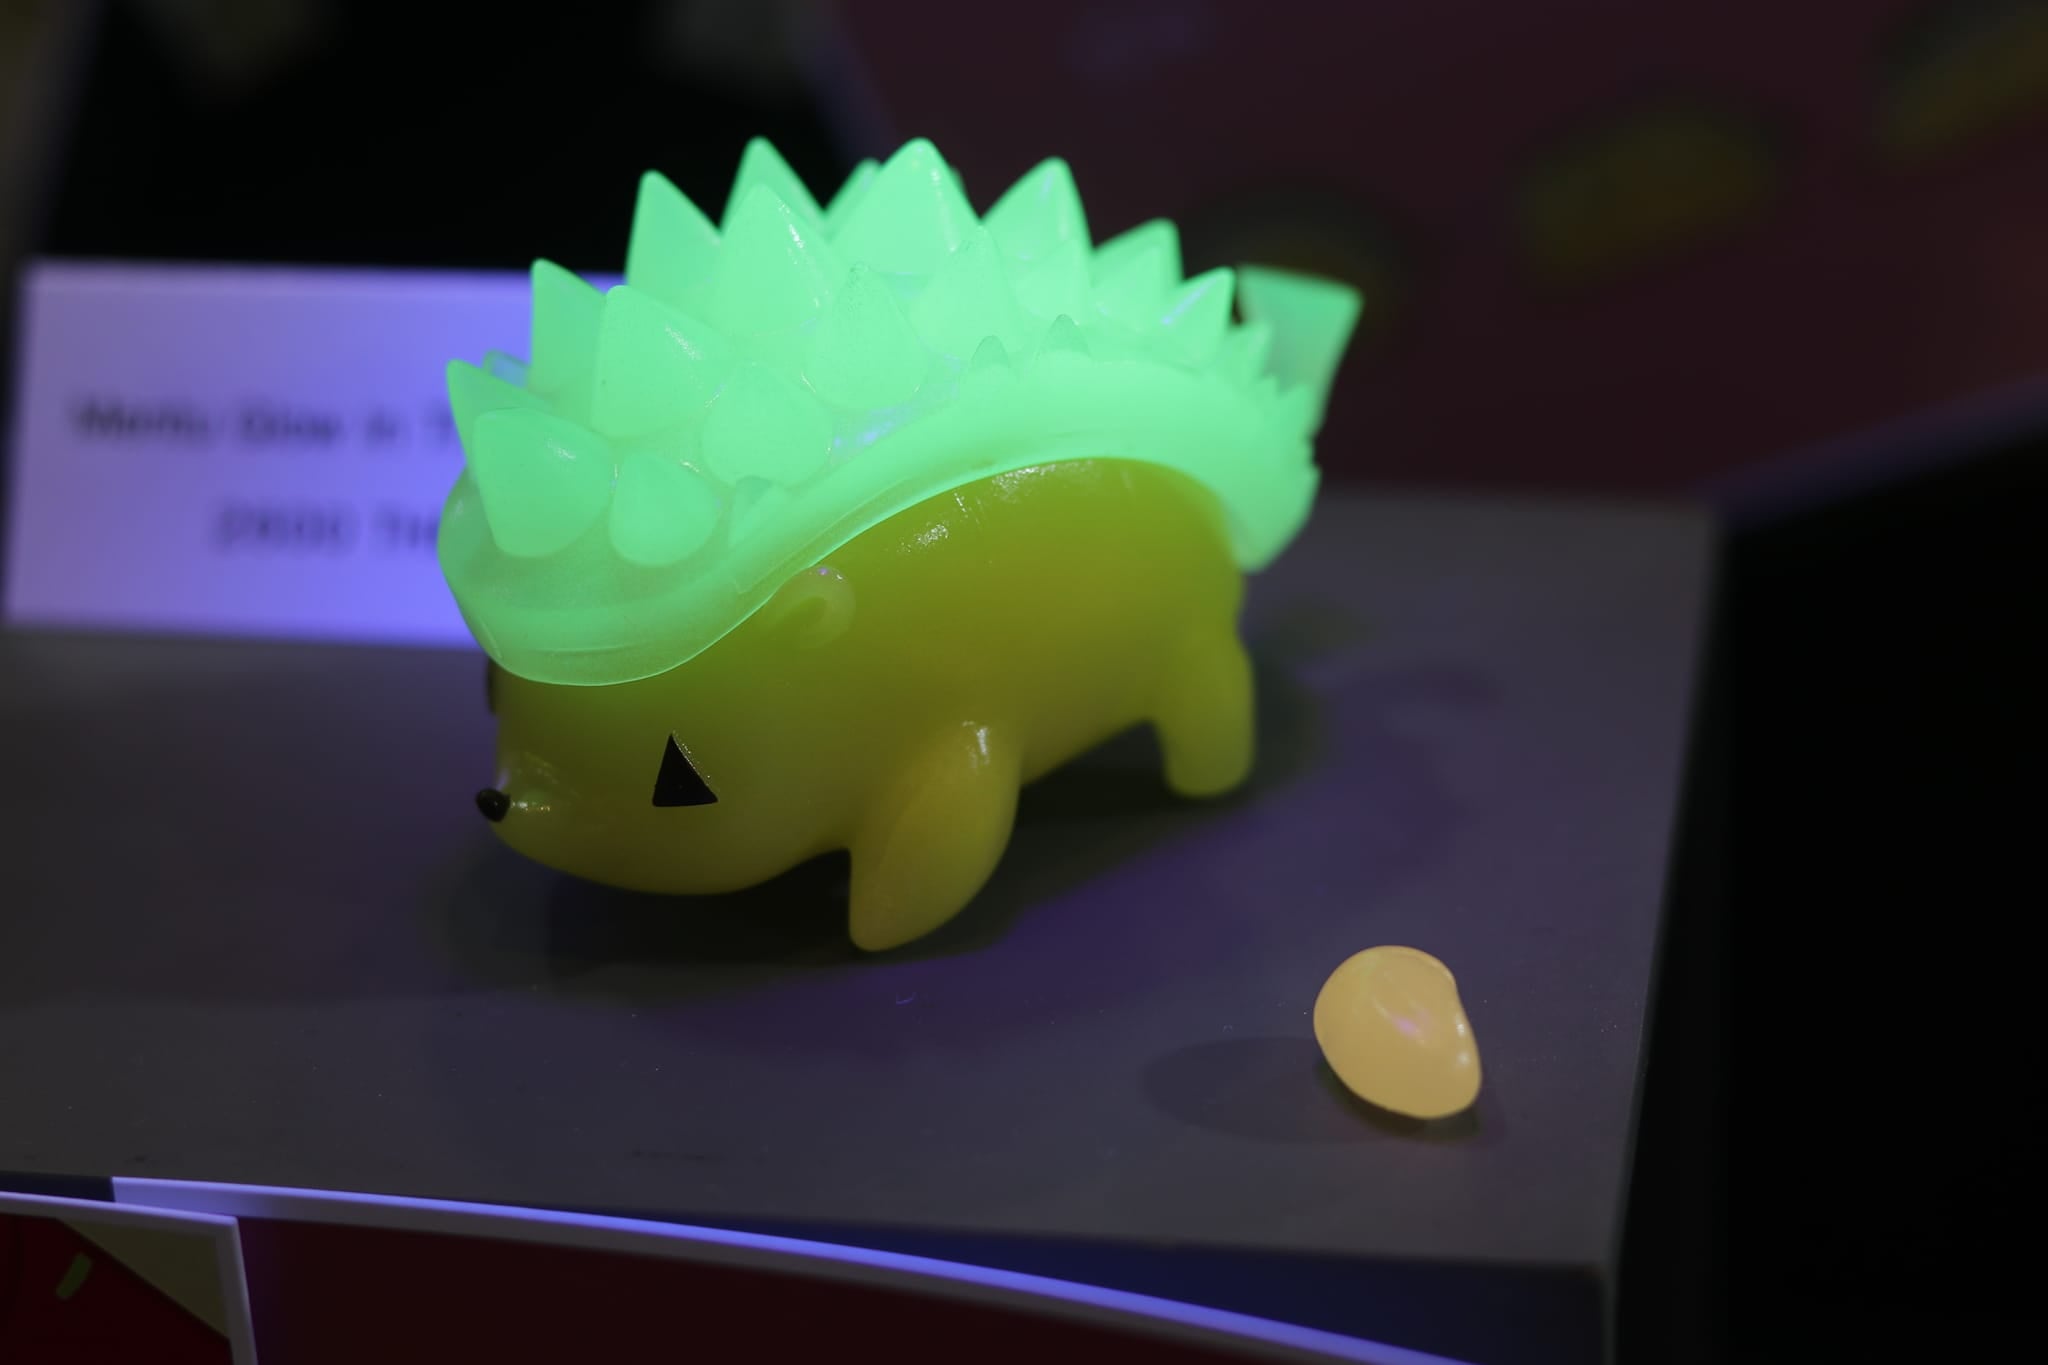 Mentu The Durian Hedgehog - Glow In The Dark by Hootatoe